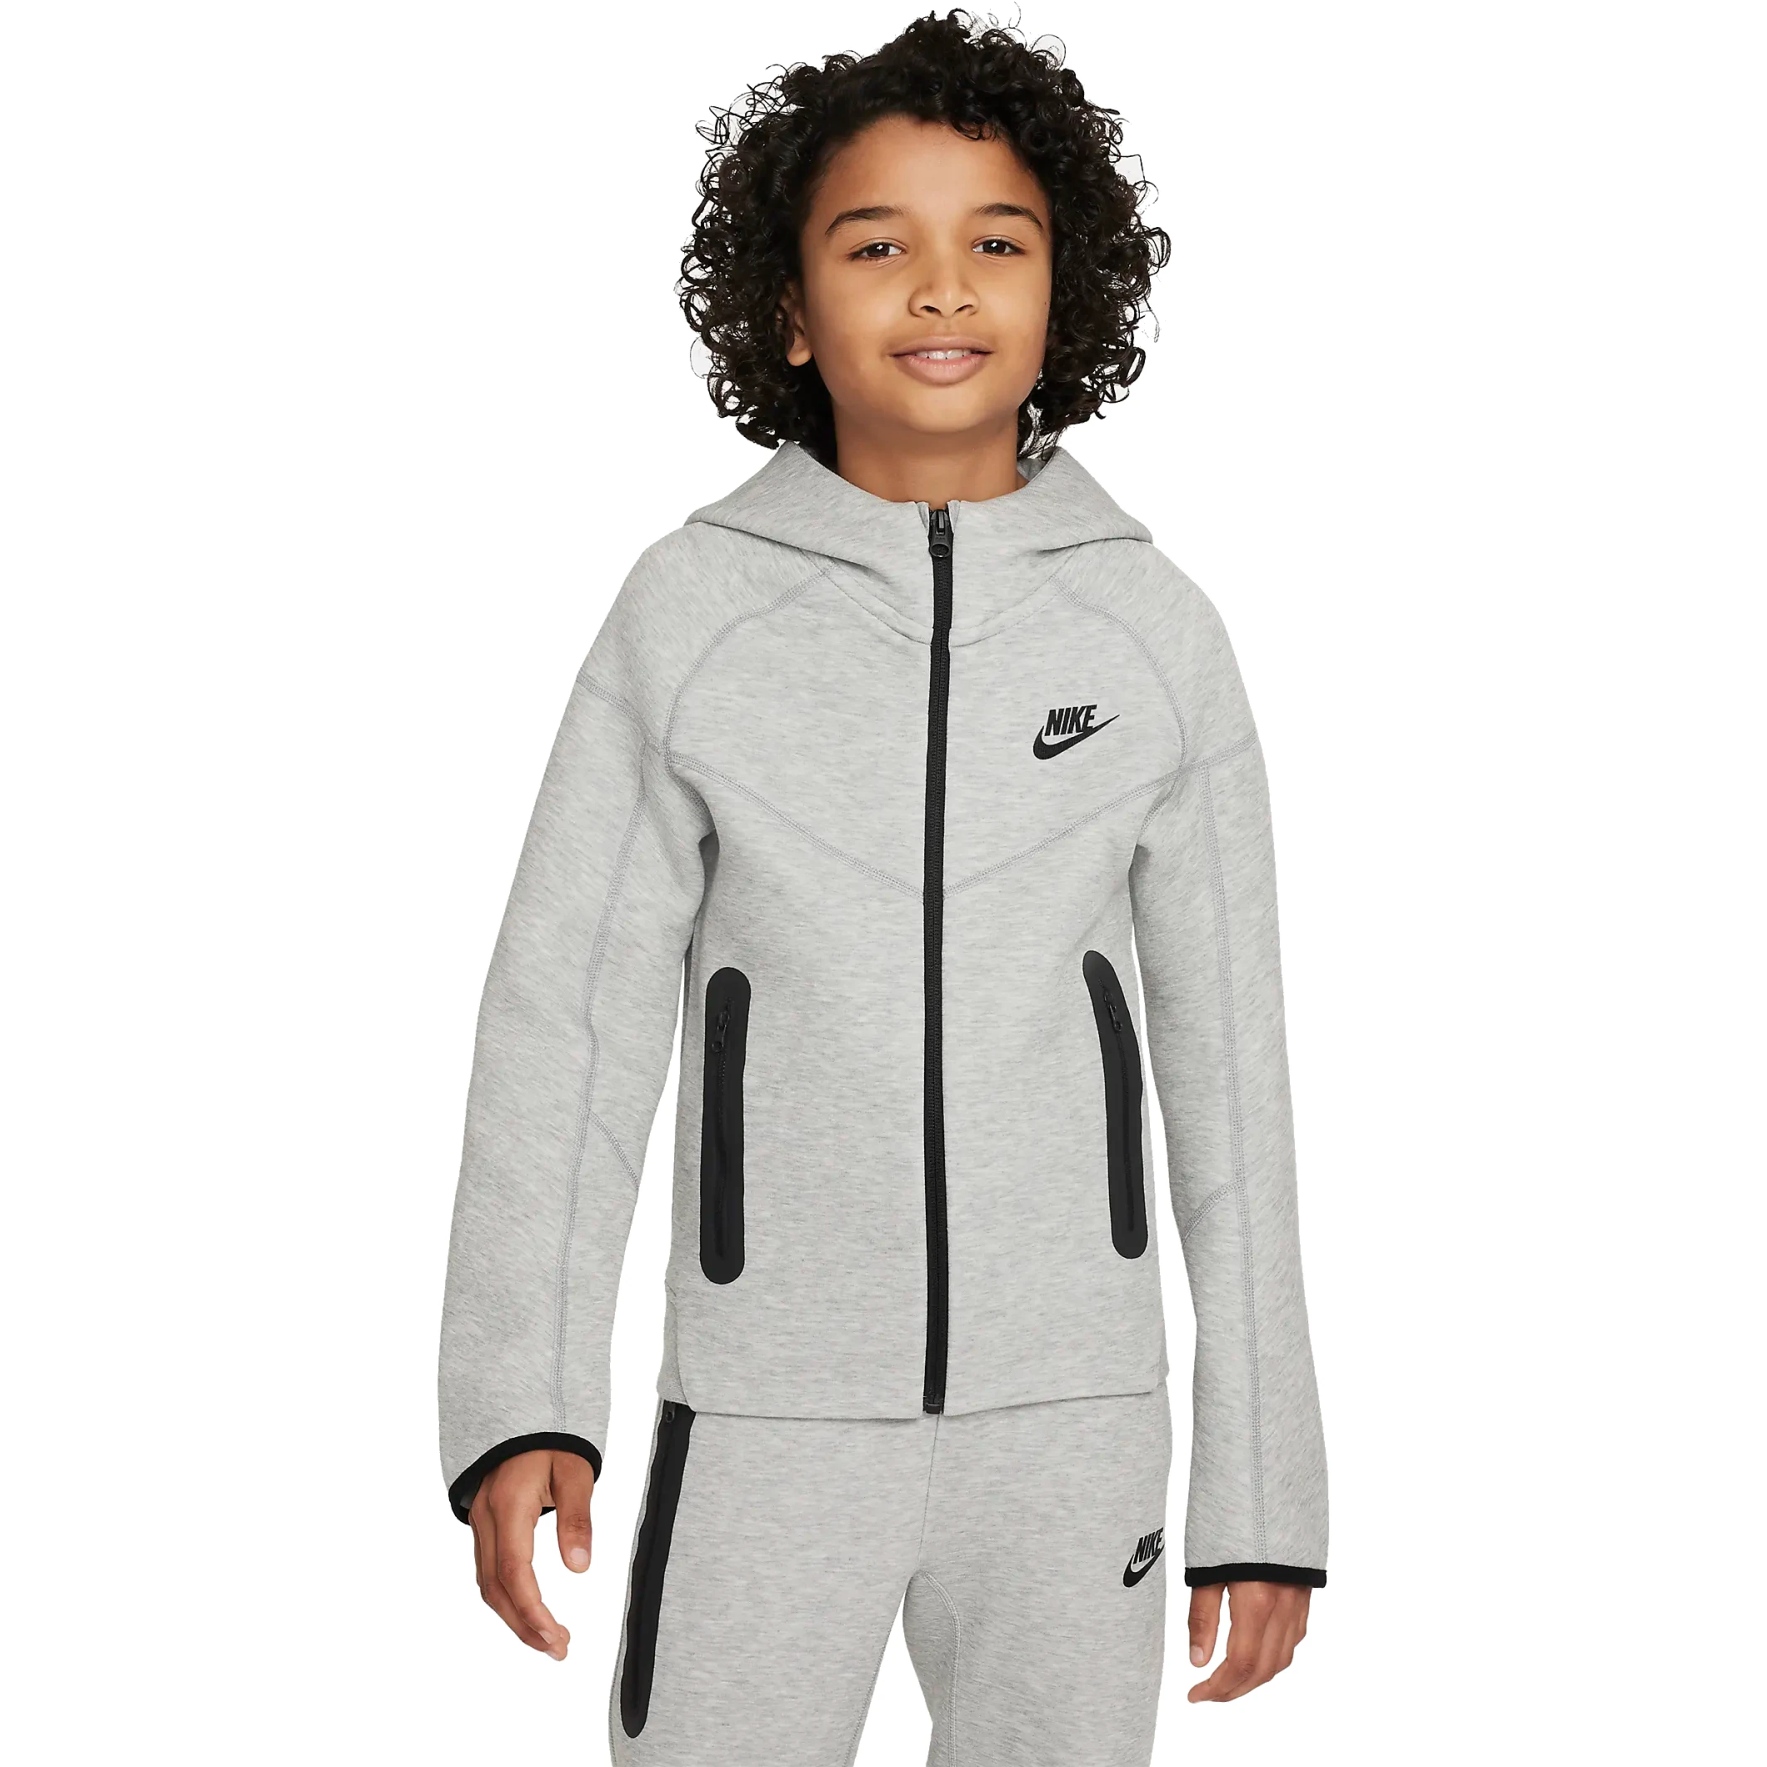 Produktbild von Nike Sportswear Tech Fleece Kapuzenjacke für ältere Kinder - dark grey heather/black/black FD3285-063